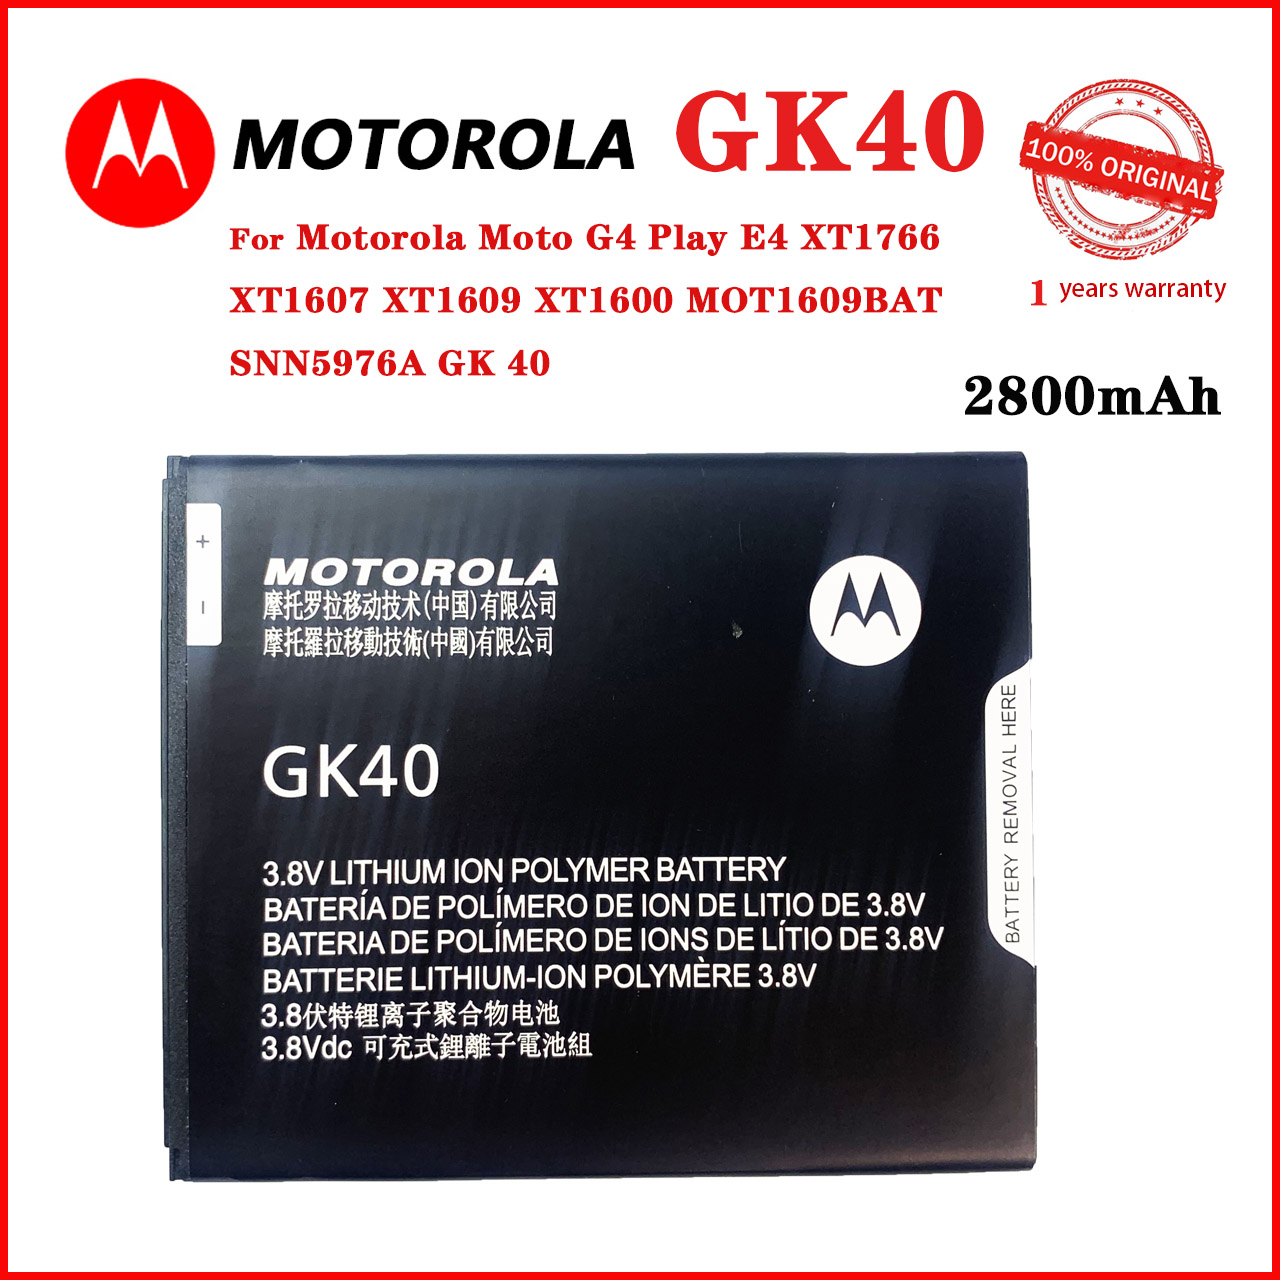 Bateria GK40 Motorola - Moto G4 Play, G5, E3